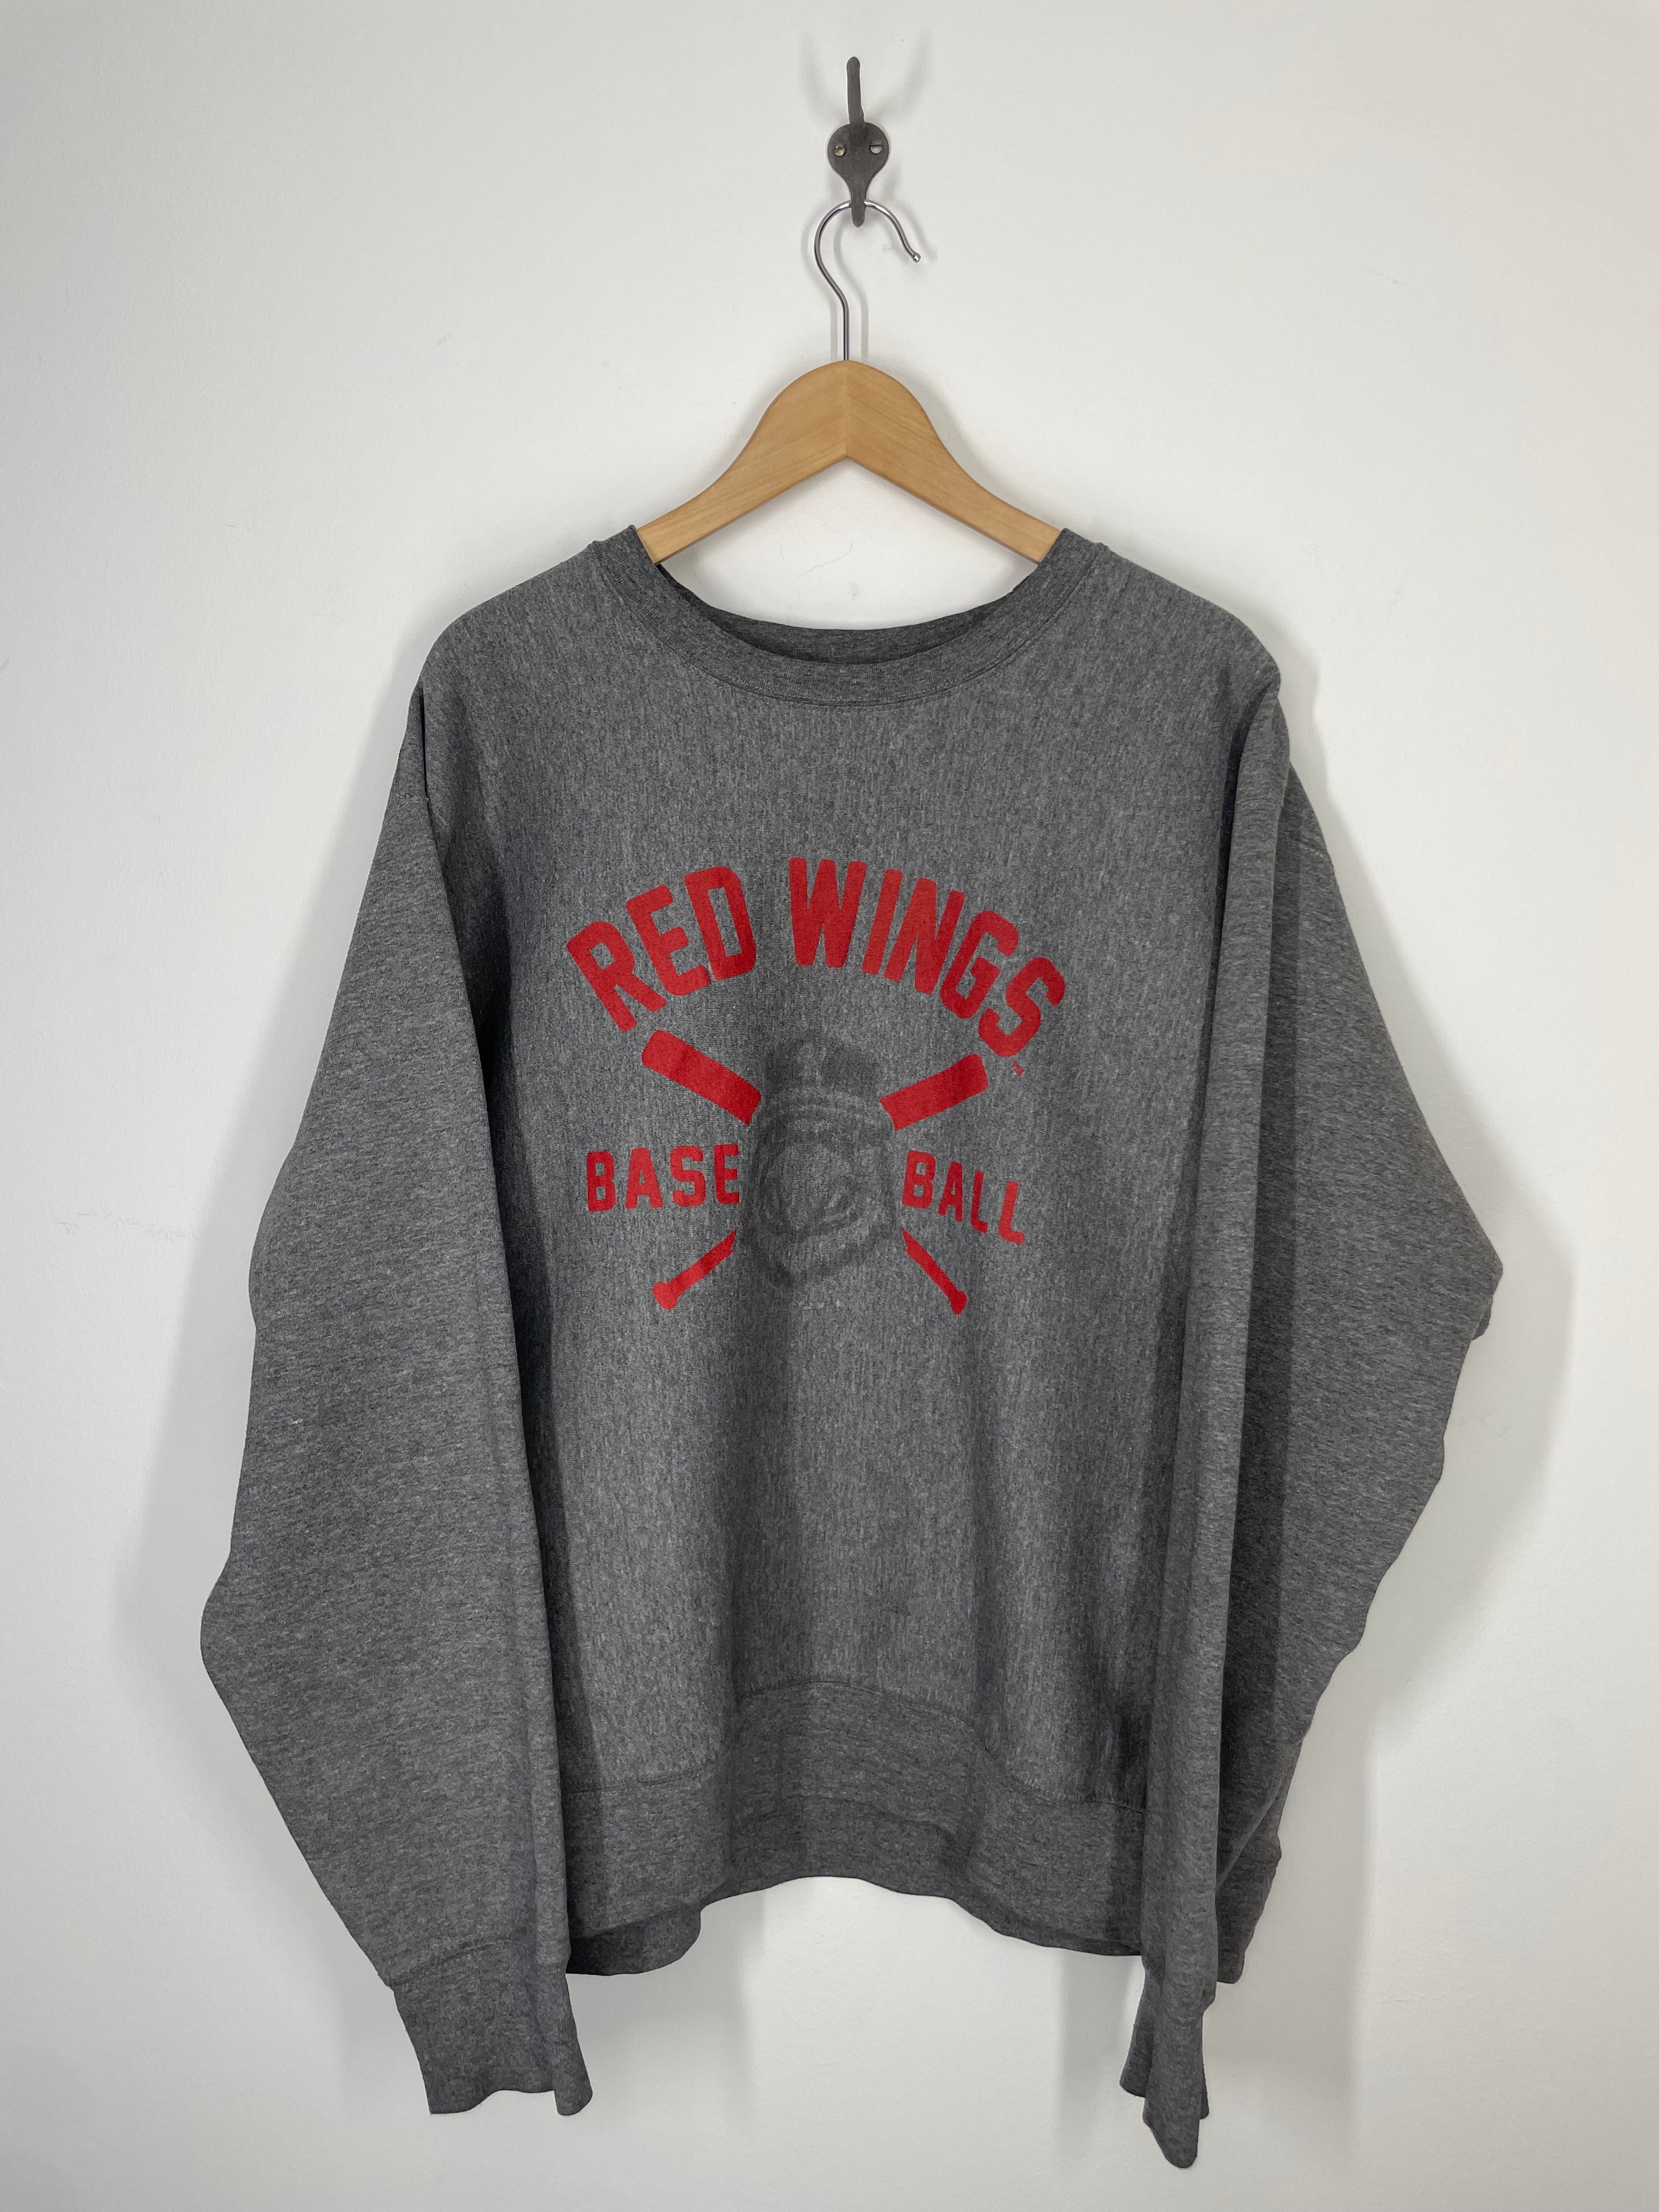 Triple A Rochester Red Wings Baseball Crewneck Sweatshirt - MV Pro Weave - XL